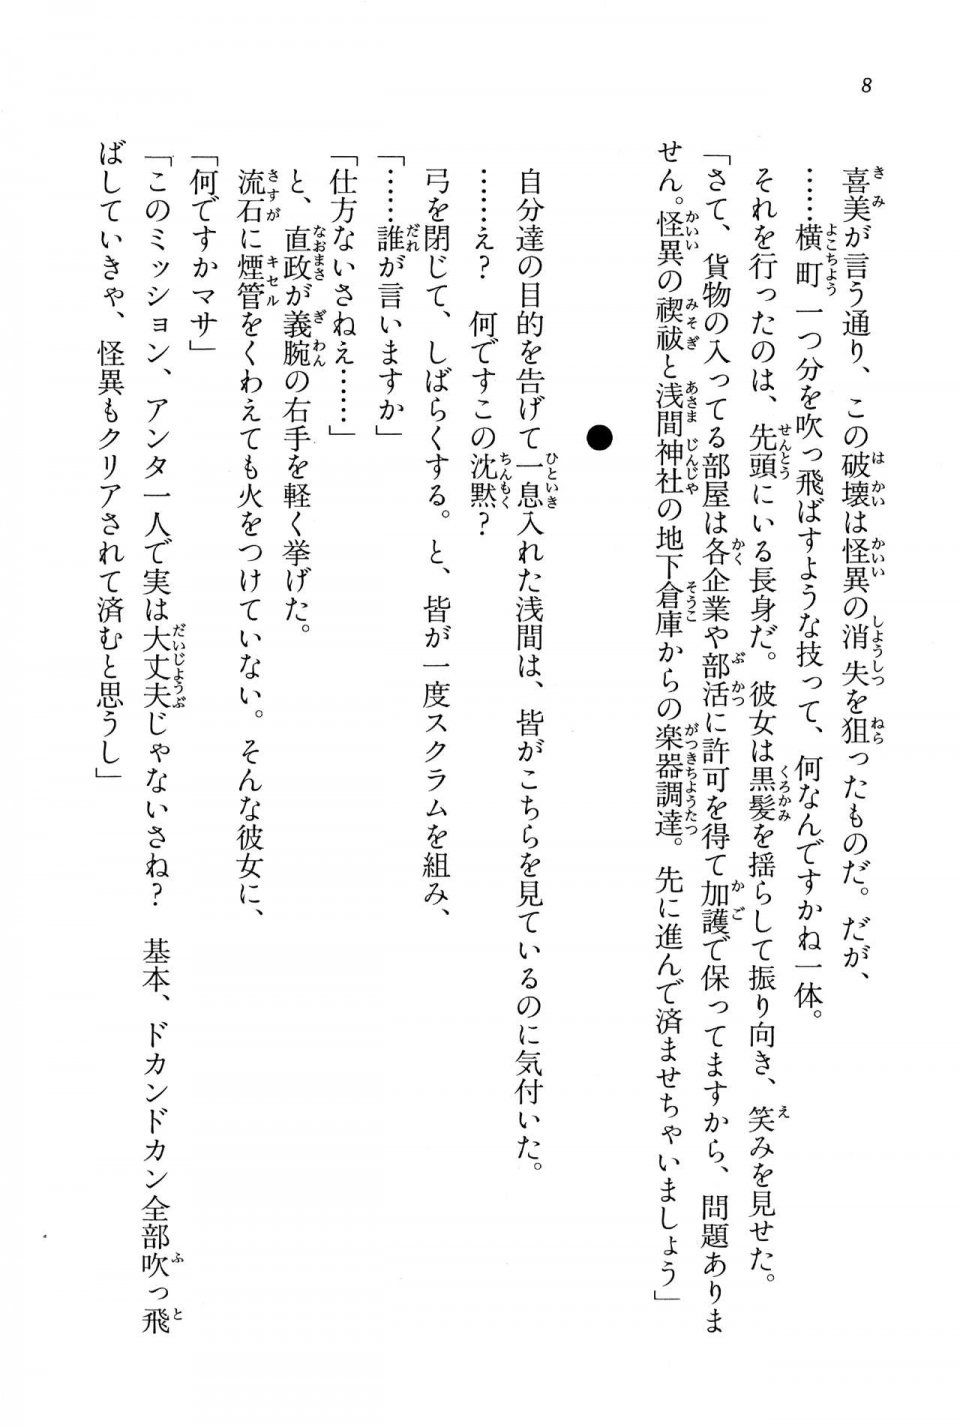 Kyoukai Senjou no Horizon BD Special Mininovel Vol 6(3B) - Photo #12